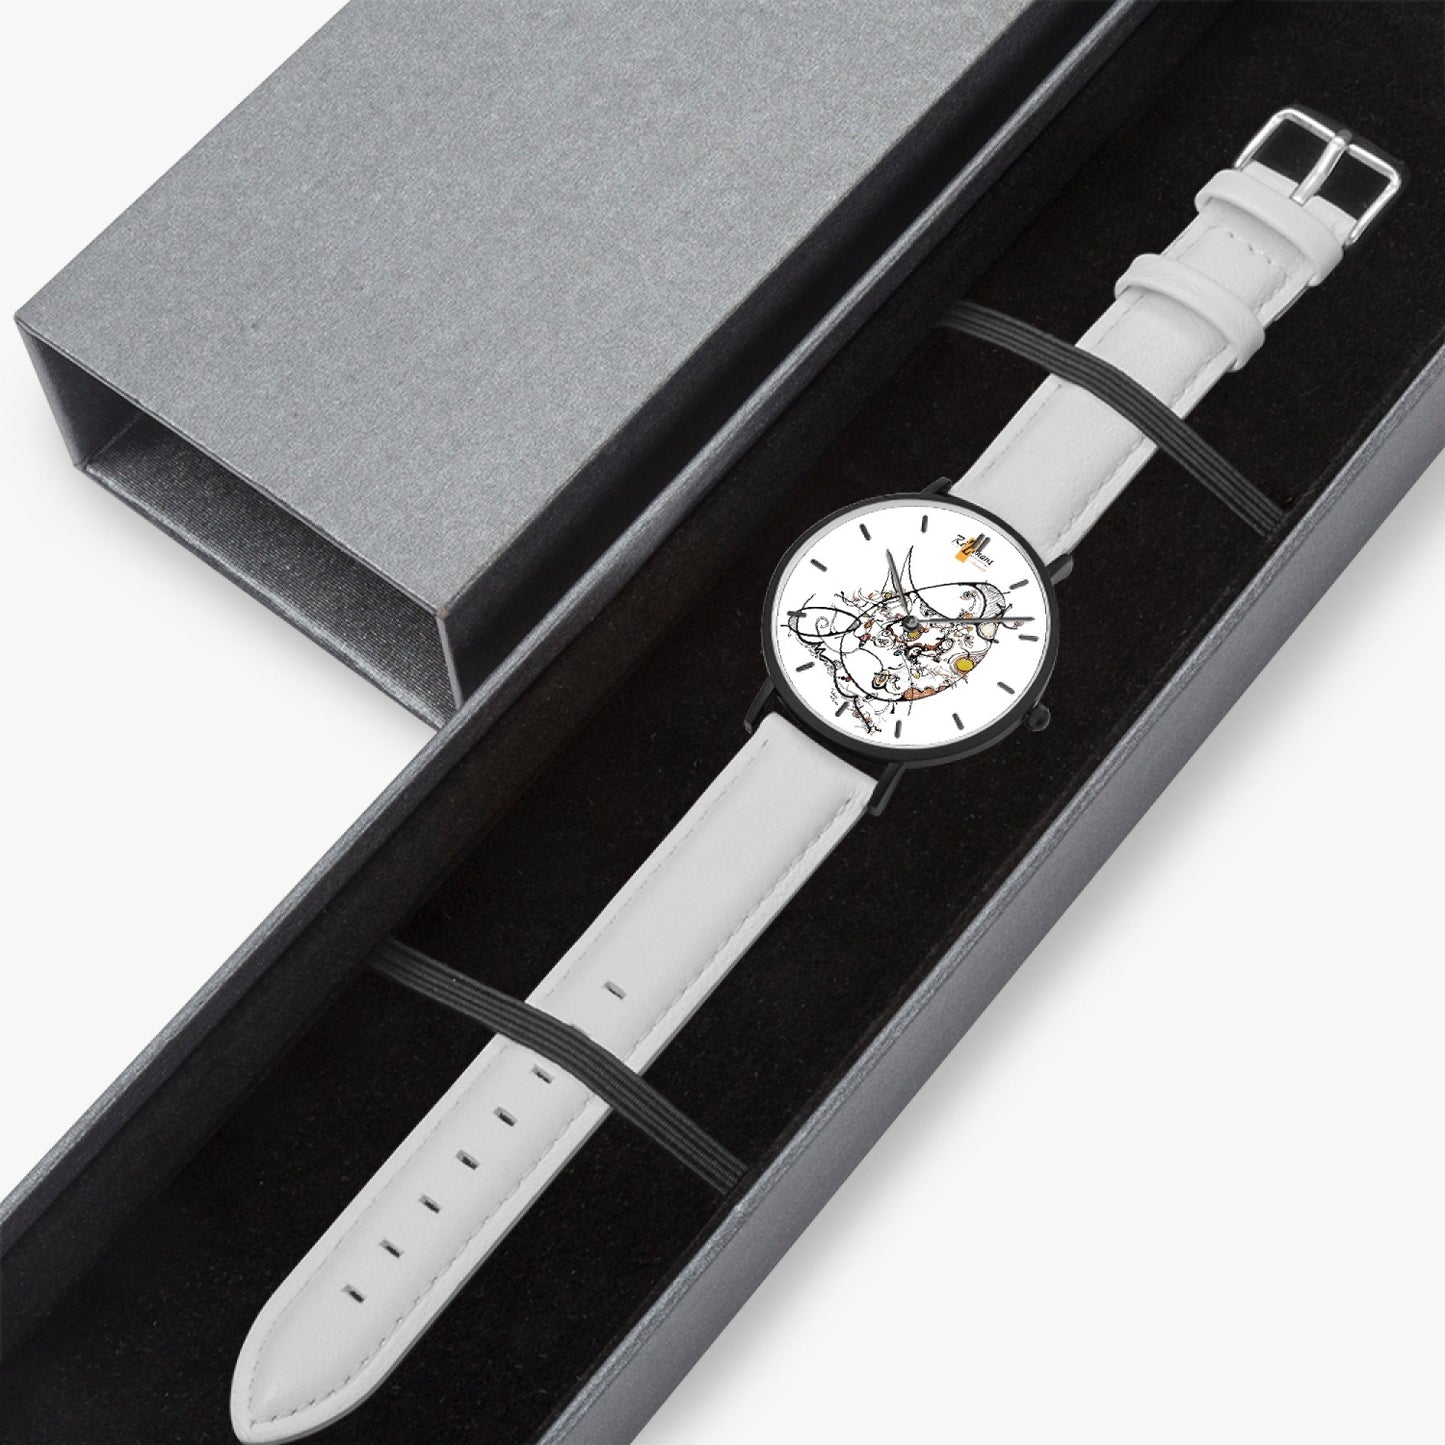 Ultra flat quartz watch "Kaomond" "(Black - with indicators)